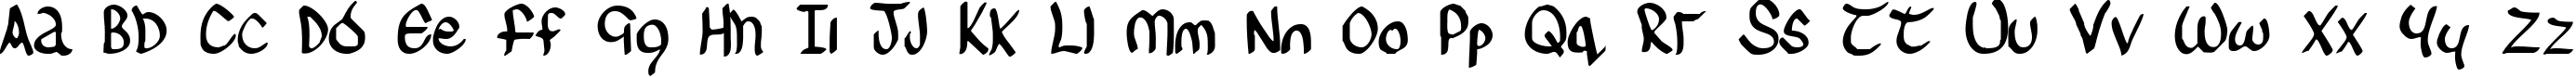 Пример написания английского алфавита шрифтом Sinead